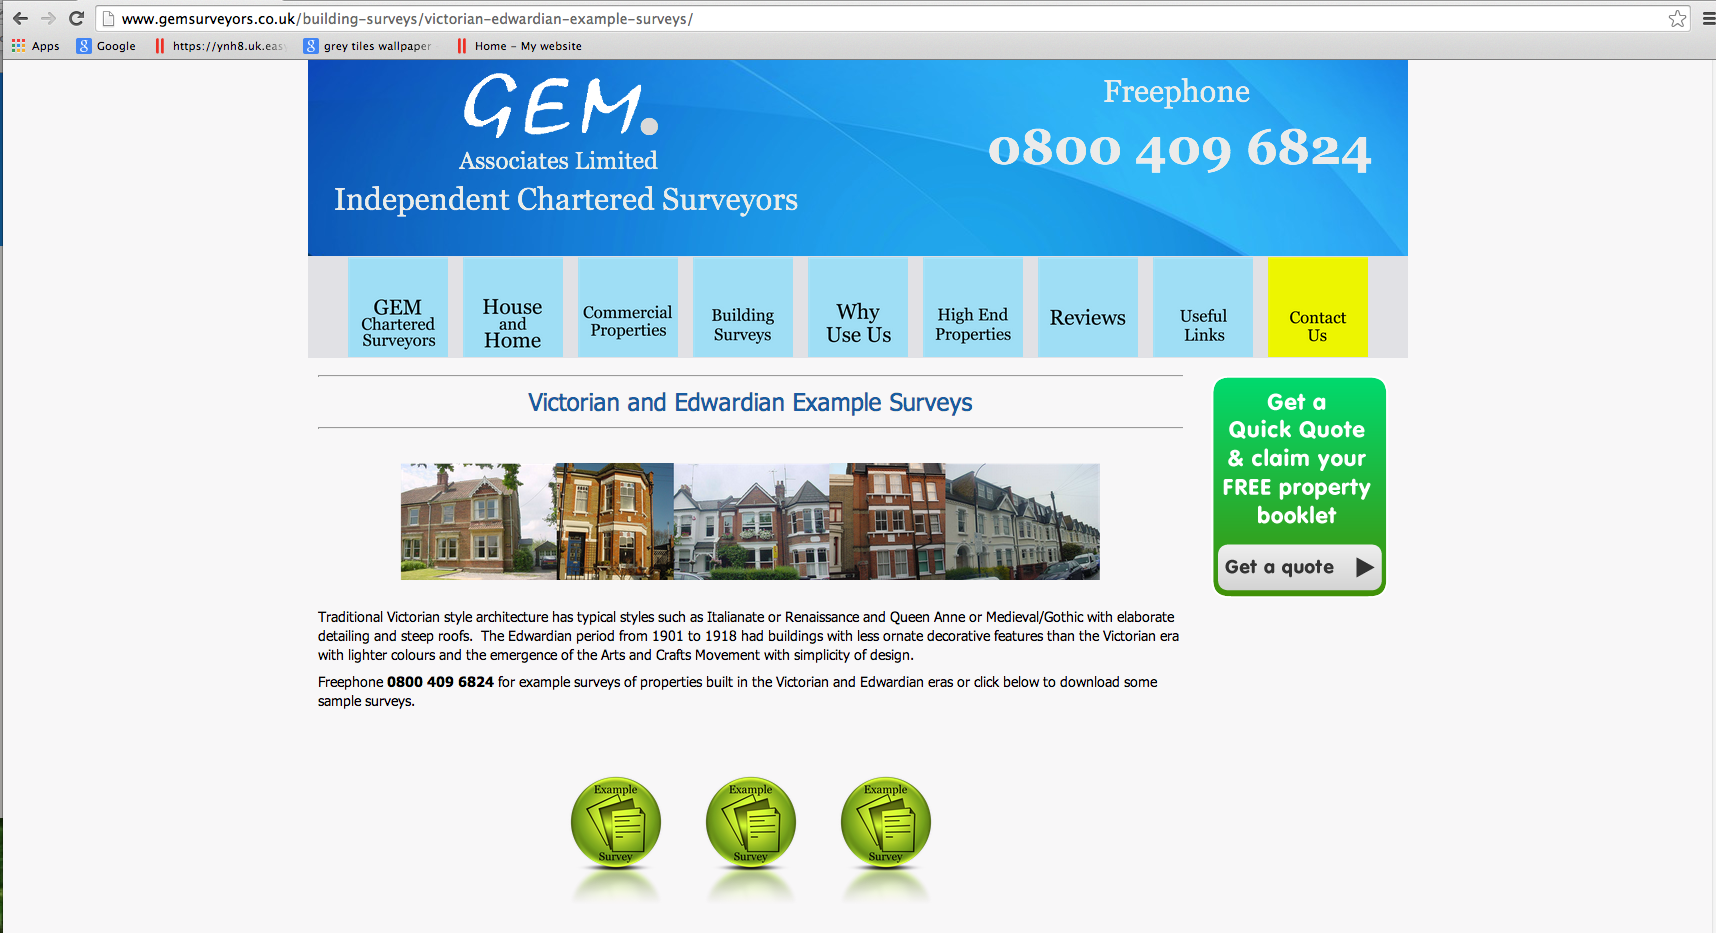 GEM Surveyors - Victorian and Edwardian Example Surveys